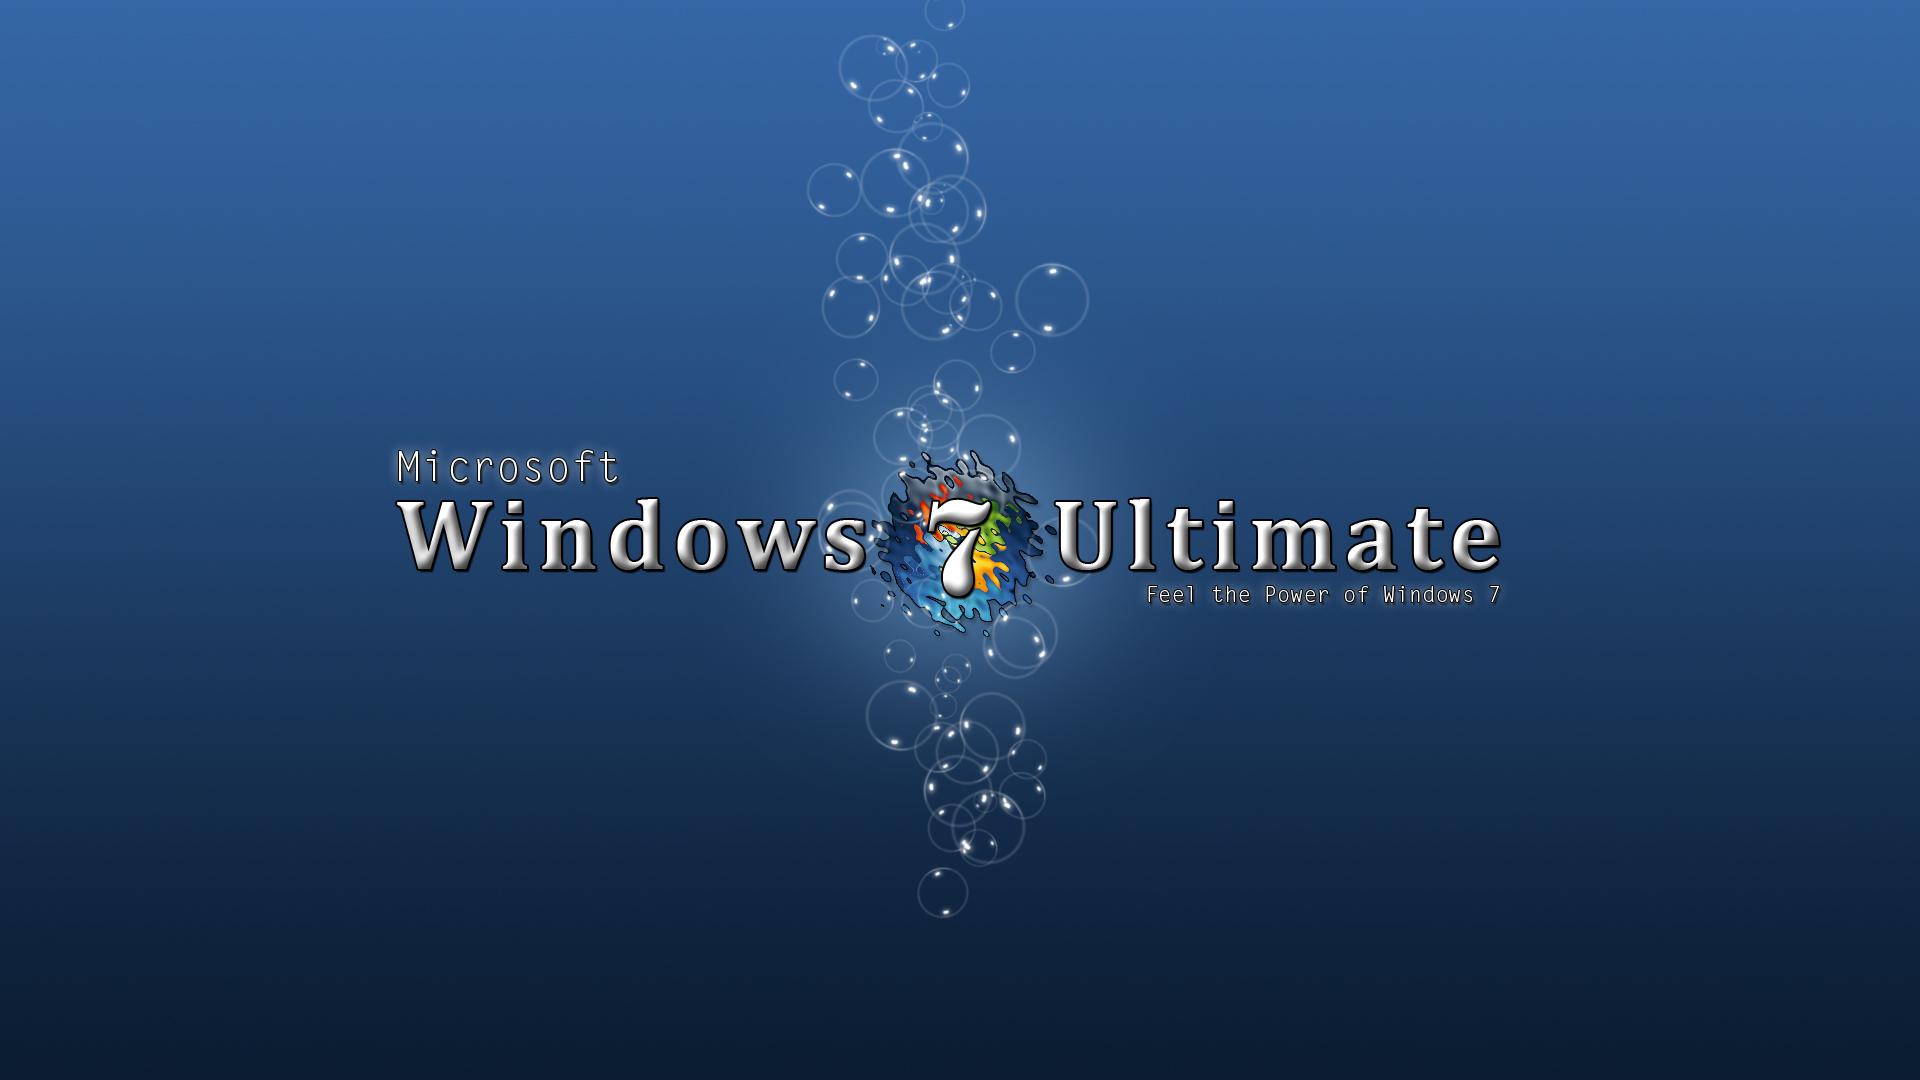 Windows 7 Ultimate Logo Wallpapers, Creative Windows - Windows 7 Ultimate Wallpapers Hd - HD Wallpaper 